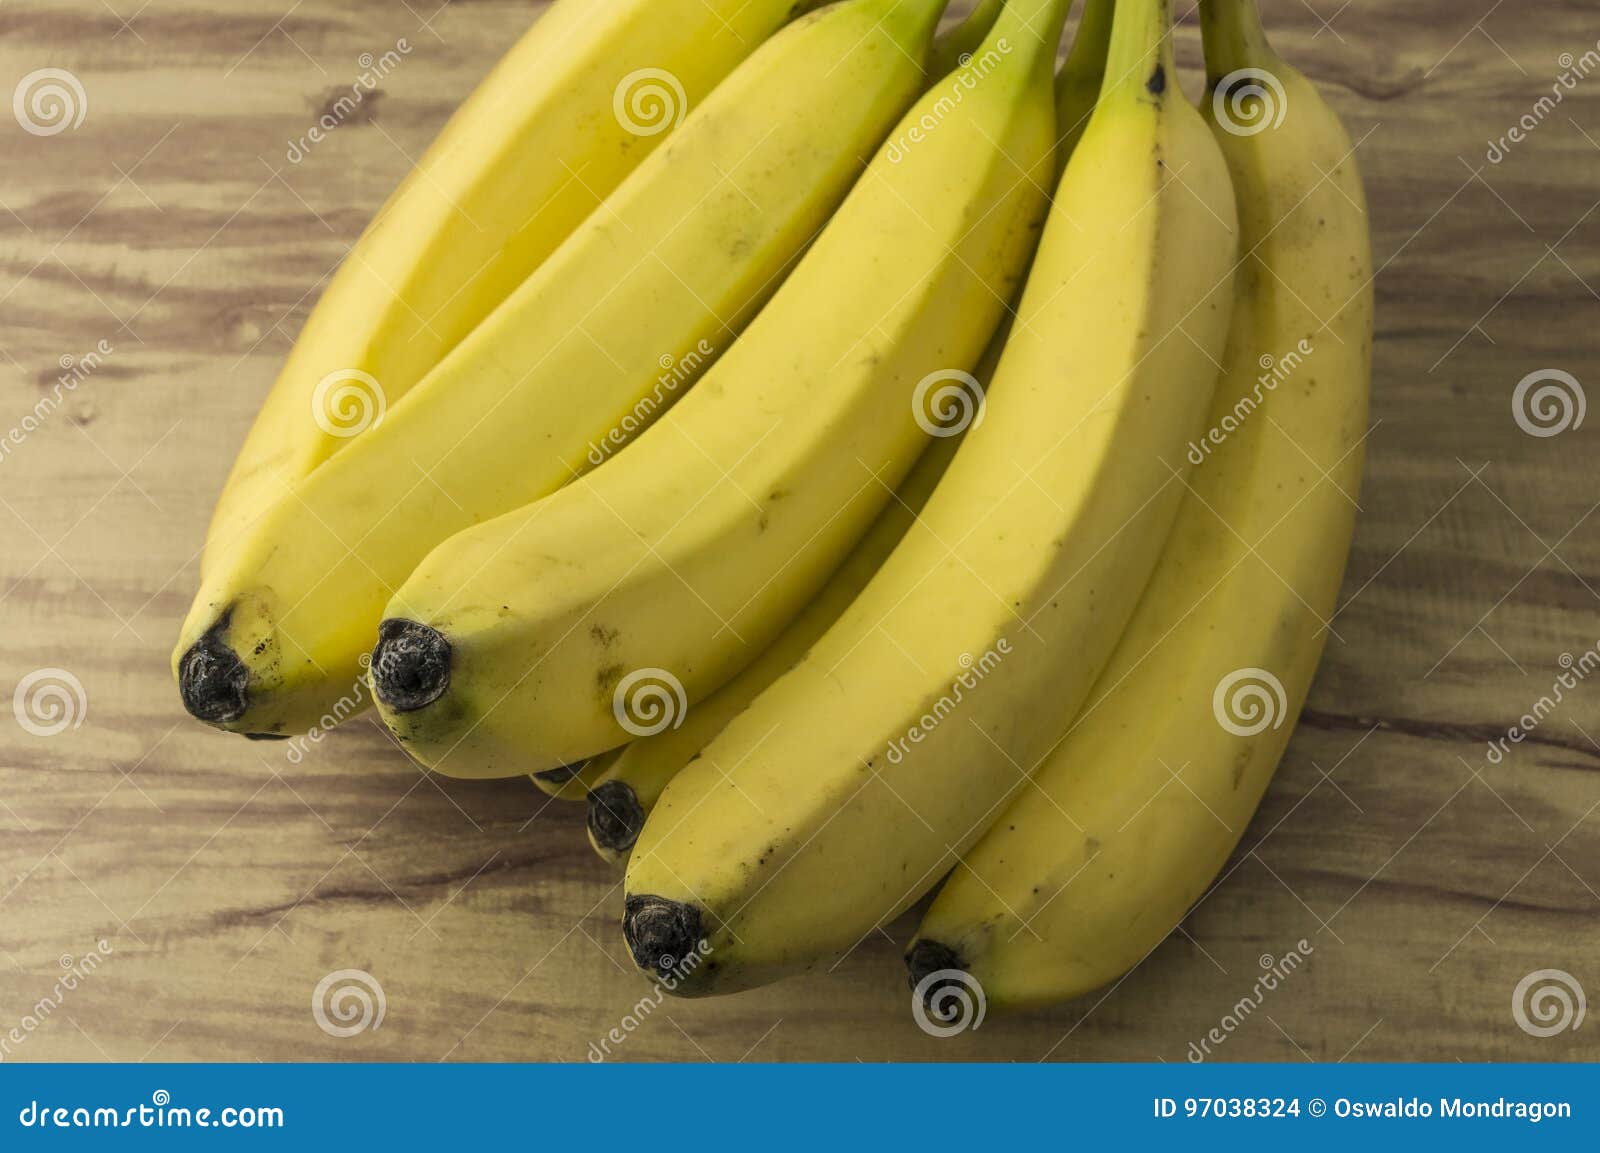 fresh natural banana bunch